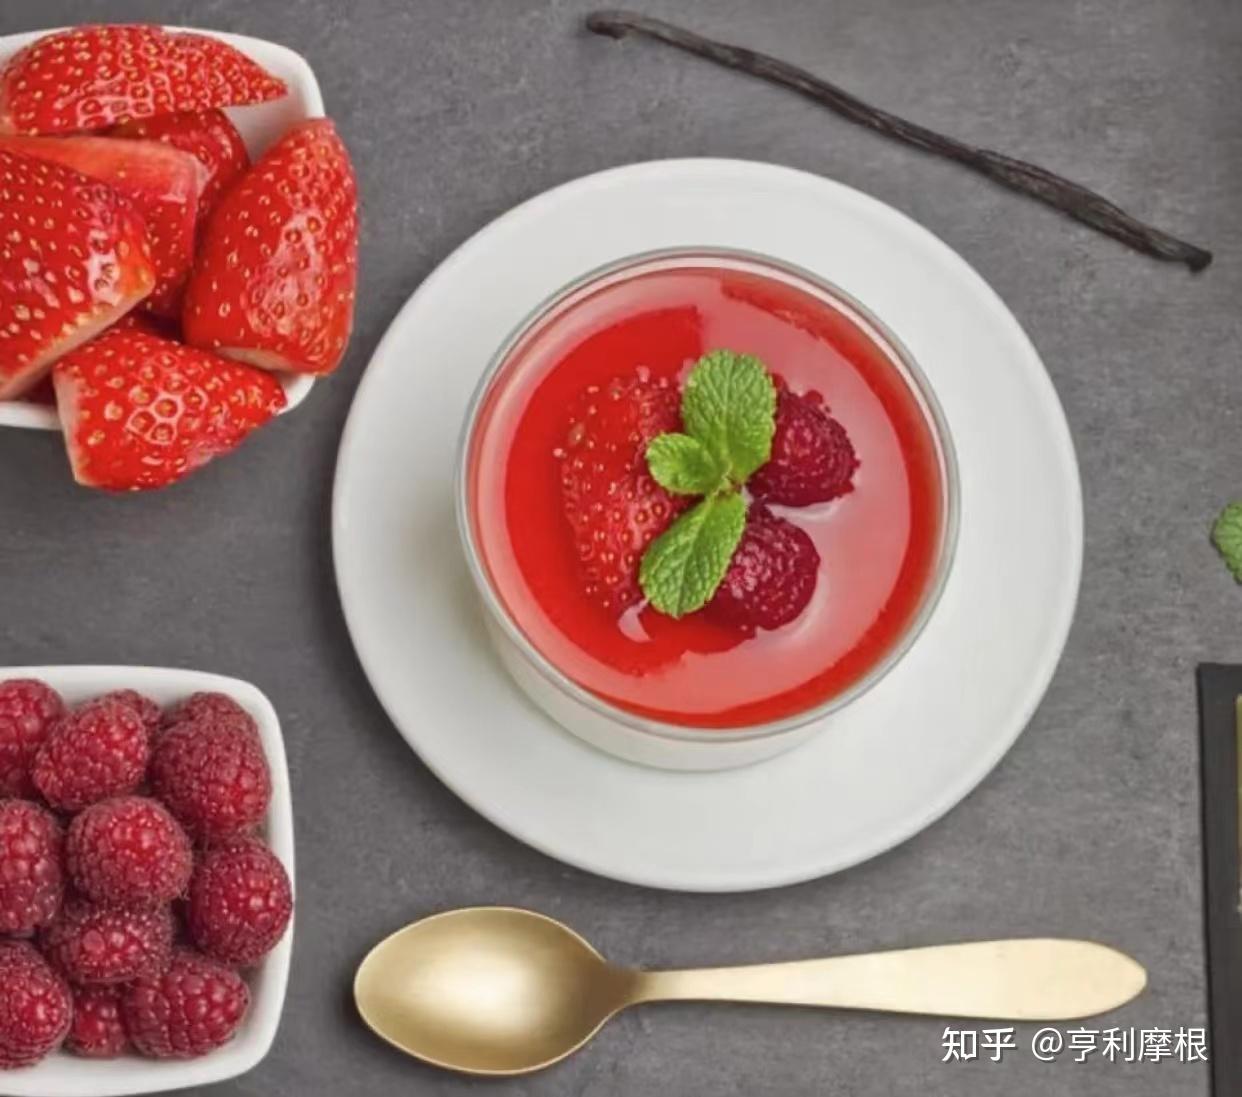 【食譜】草莓布丁(1):www.ytower.com.tw